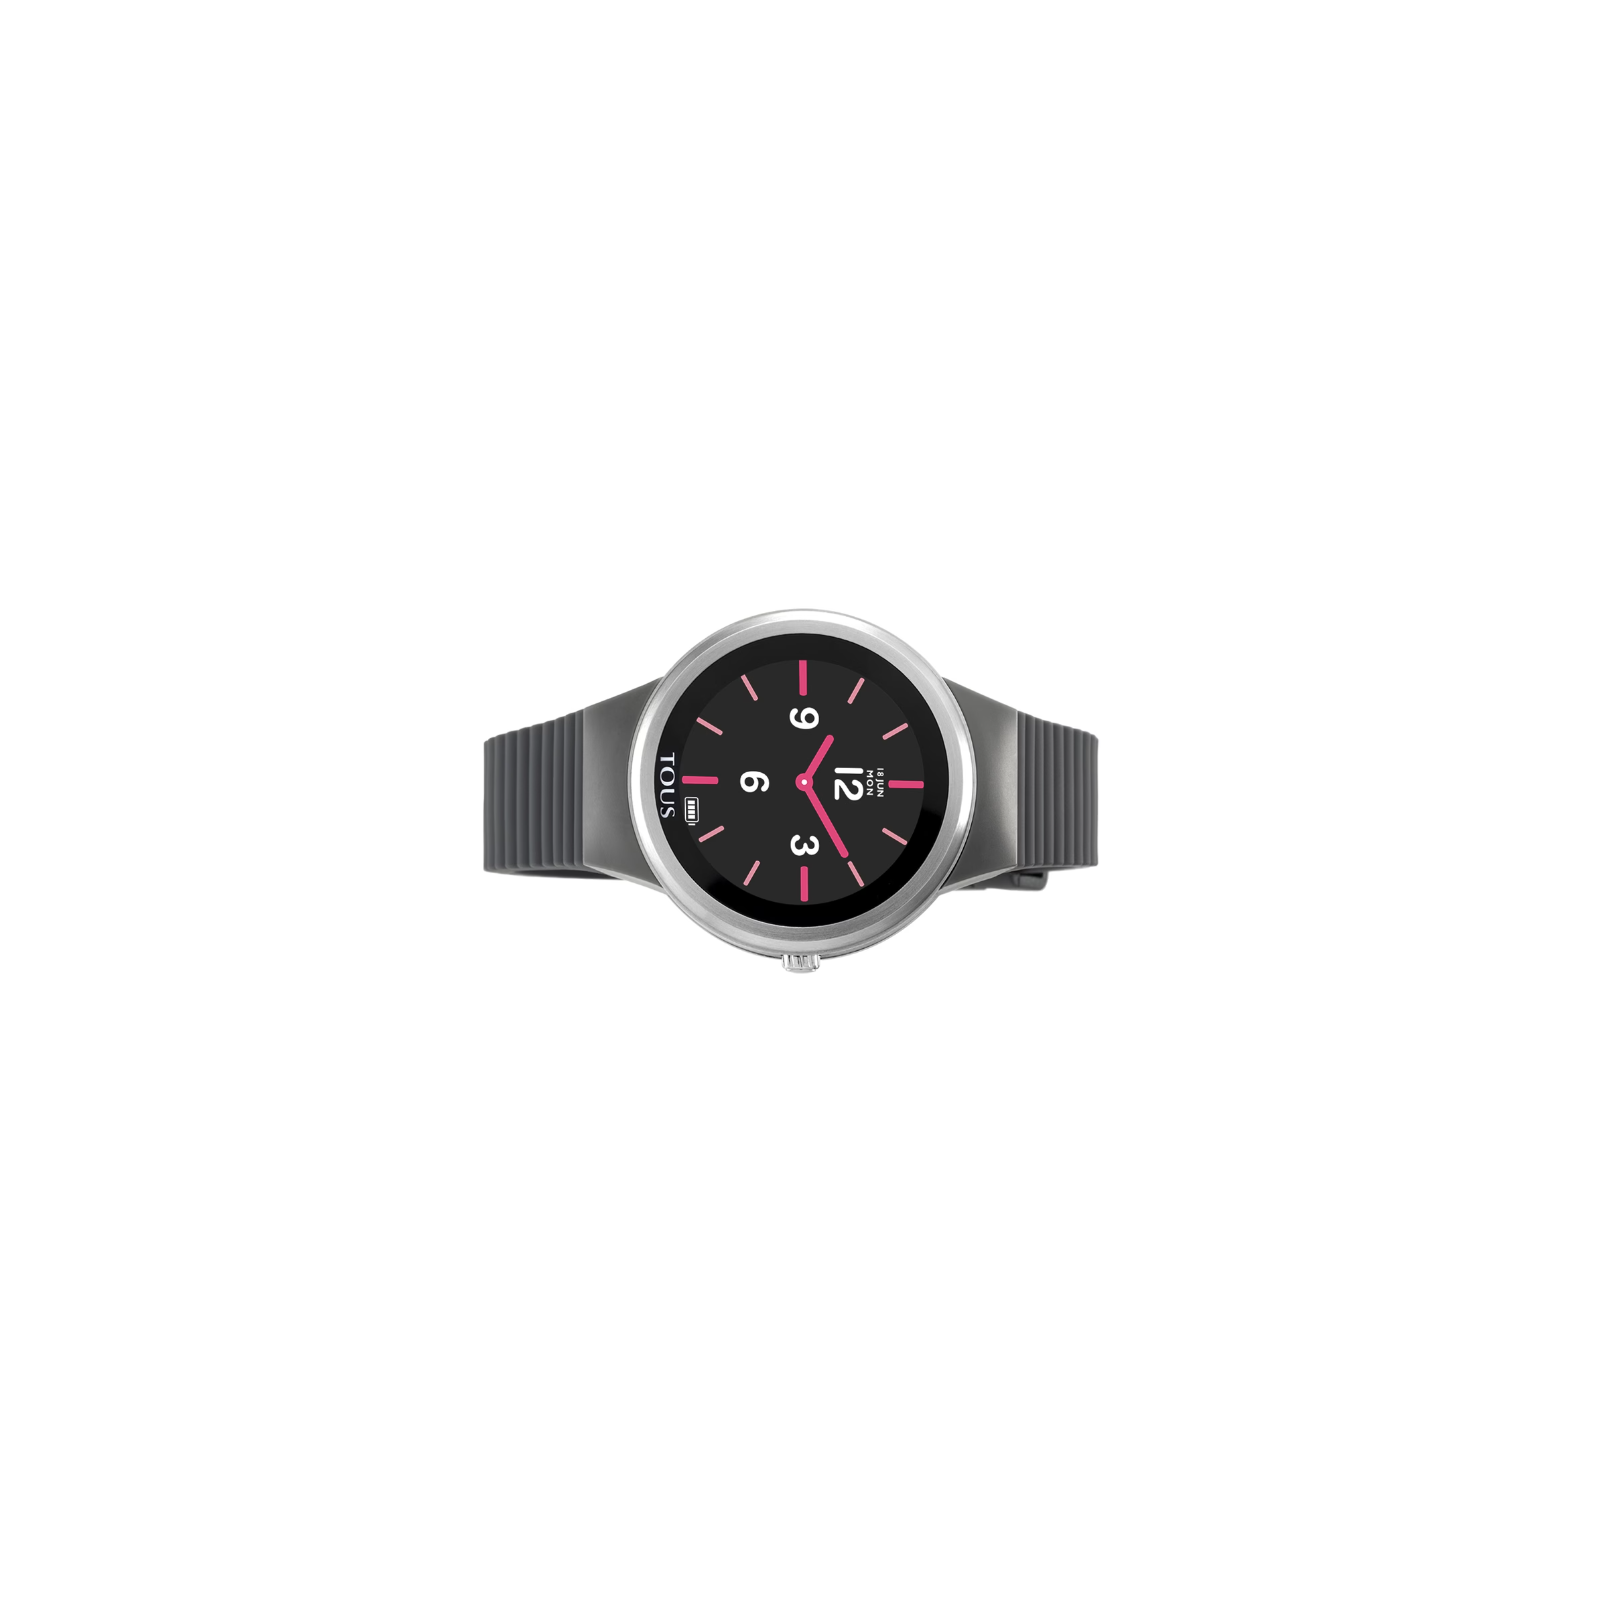 Reloj Tous smartwatch Connect acero correa silicona gris 100350680